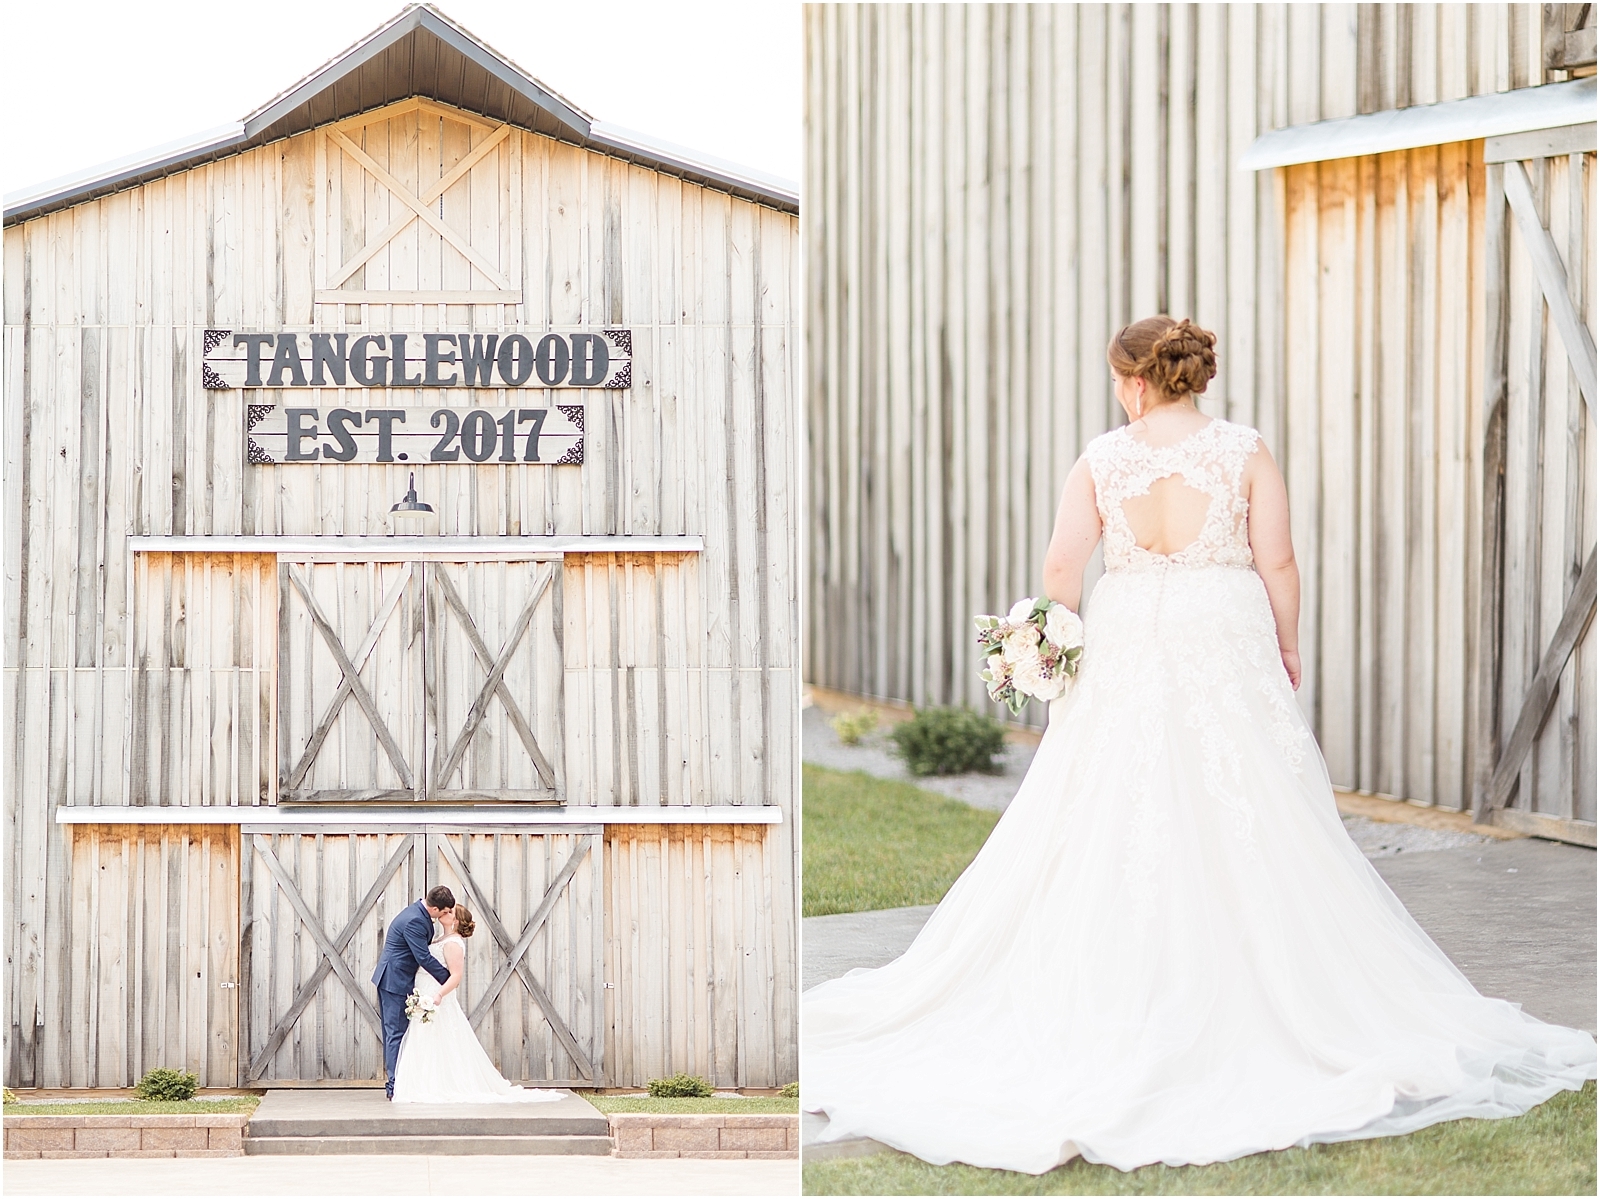 Rachel and Michael | Bret and Brandie Photography | Evansville Wedding Photographers 0048.jpg